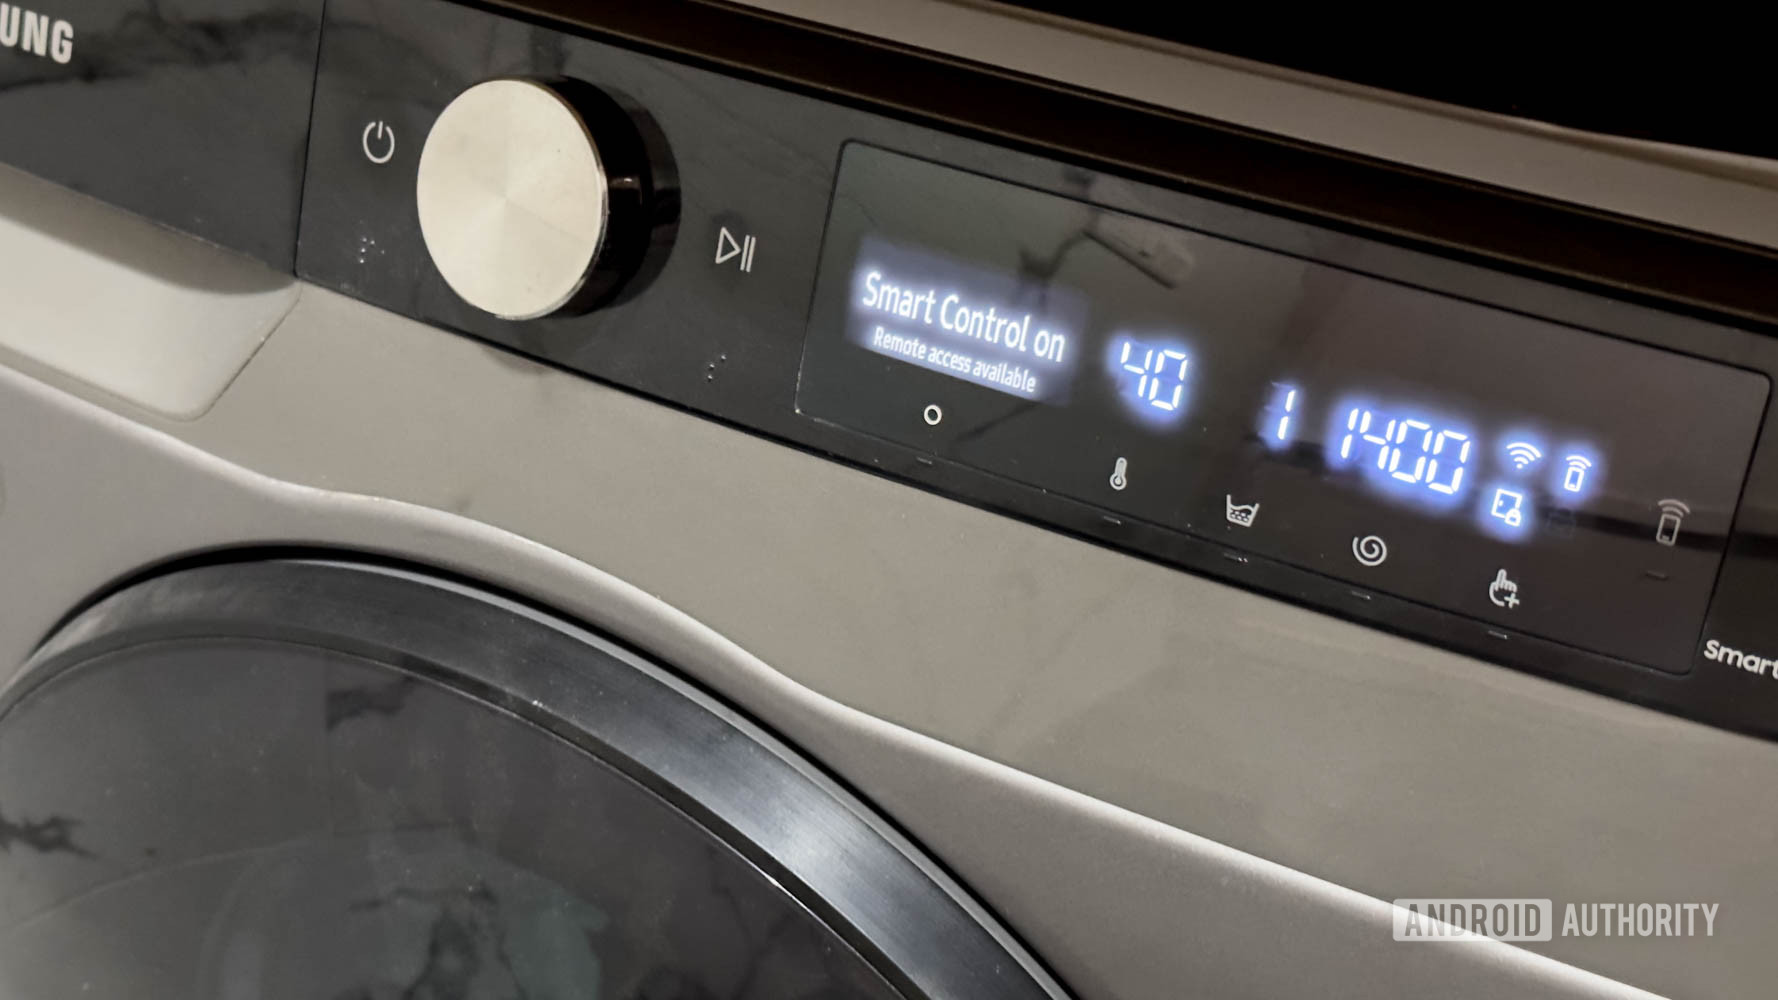 samsung washing machine and dryer showing smart control status